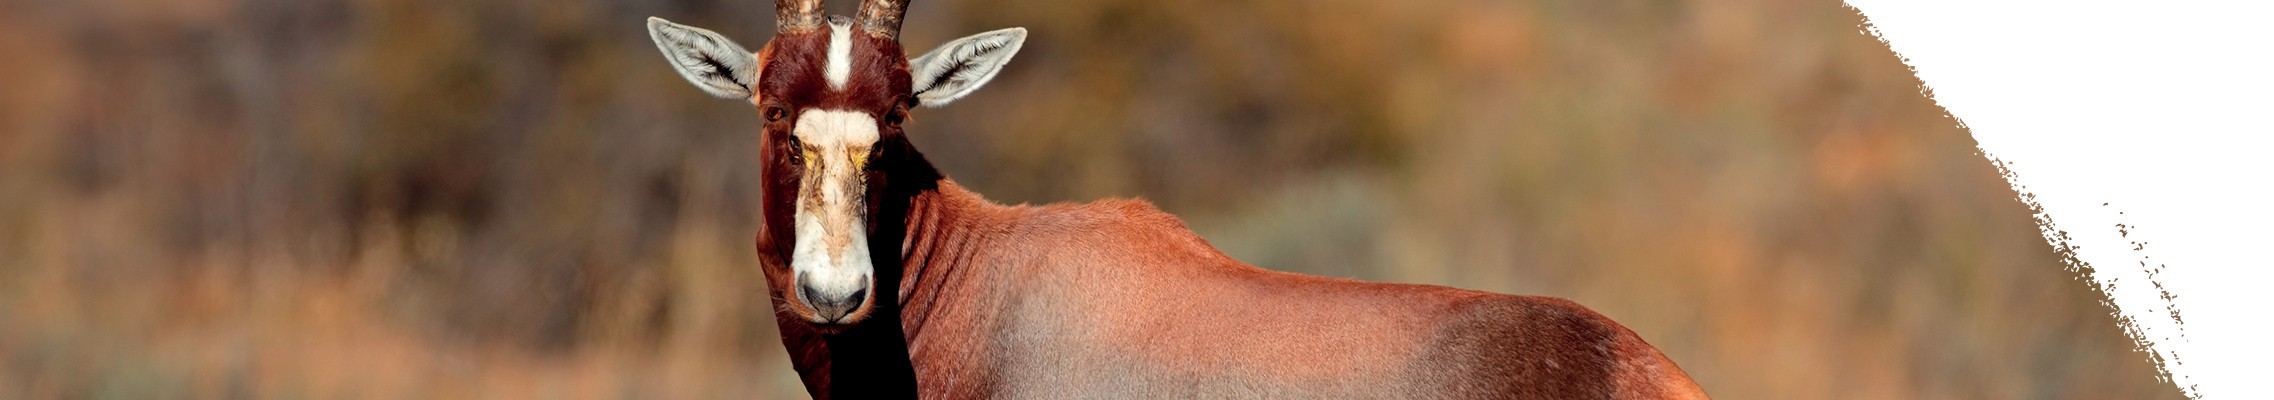 Blesbok antilop